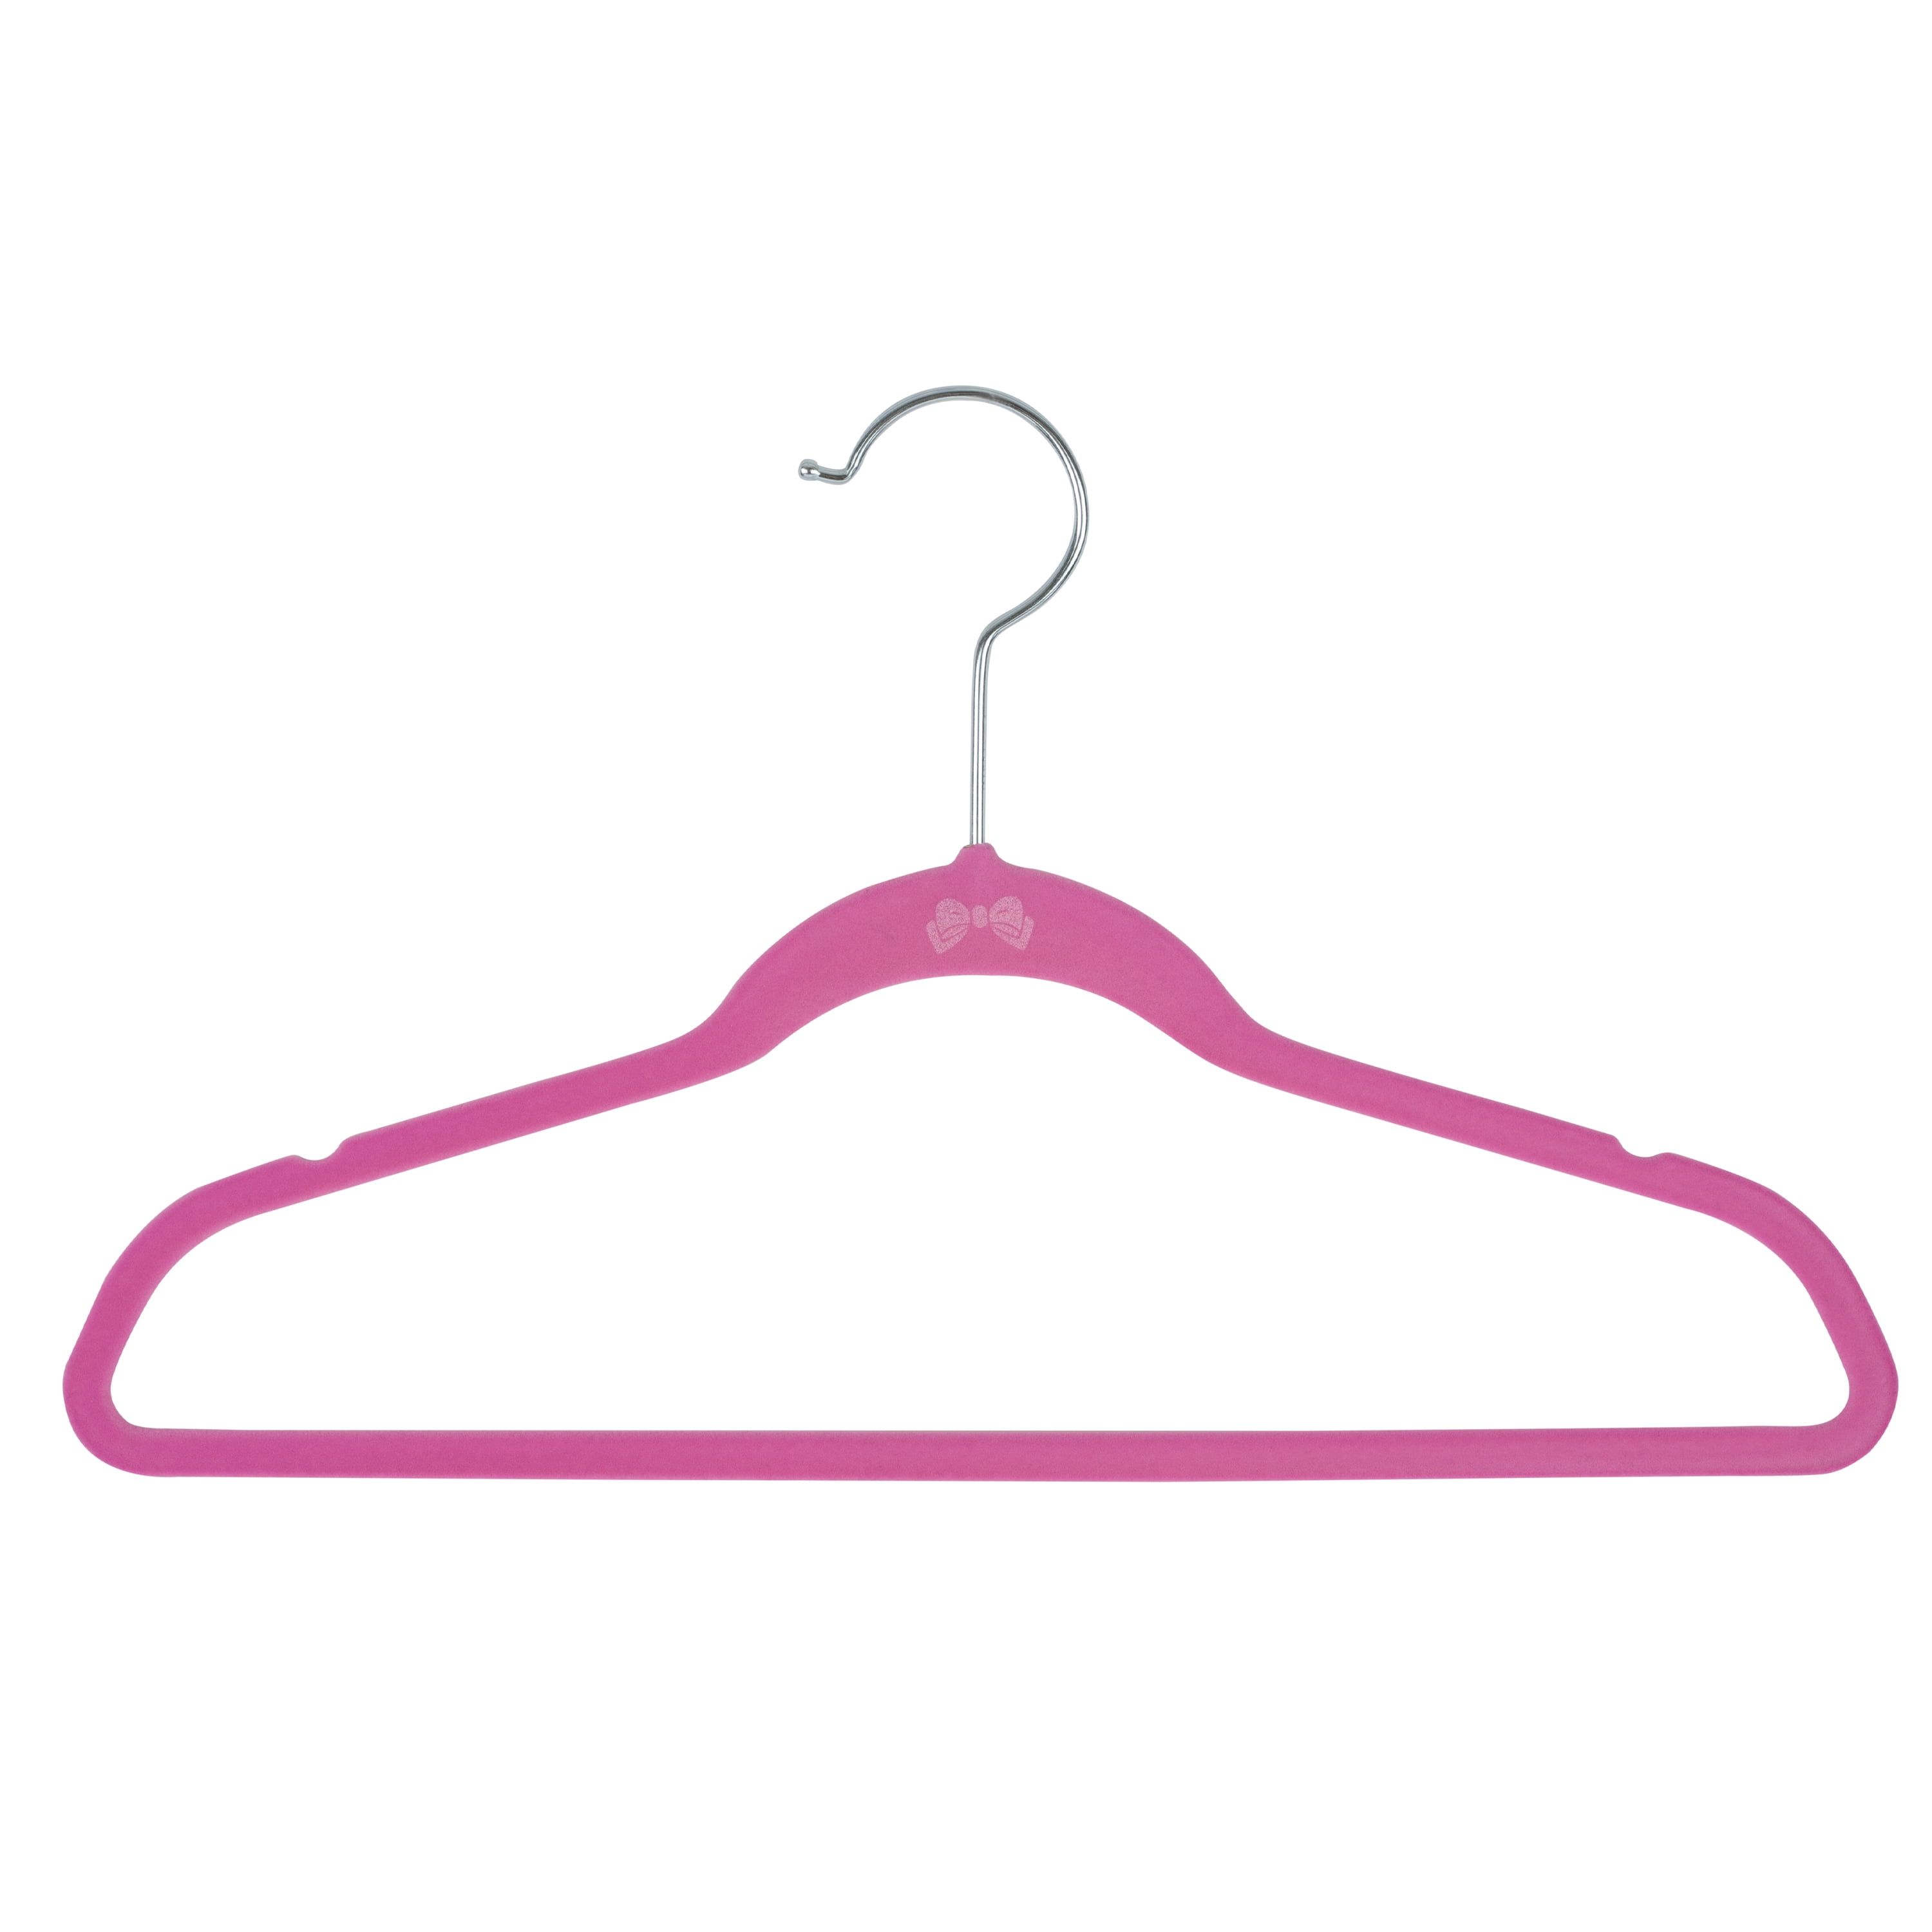 Simplify Kids 50 Pack Velvet Shirt Hangers in Neon Colors 